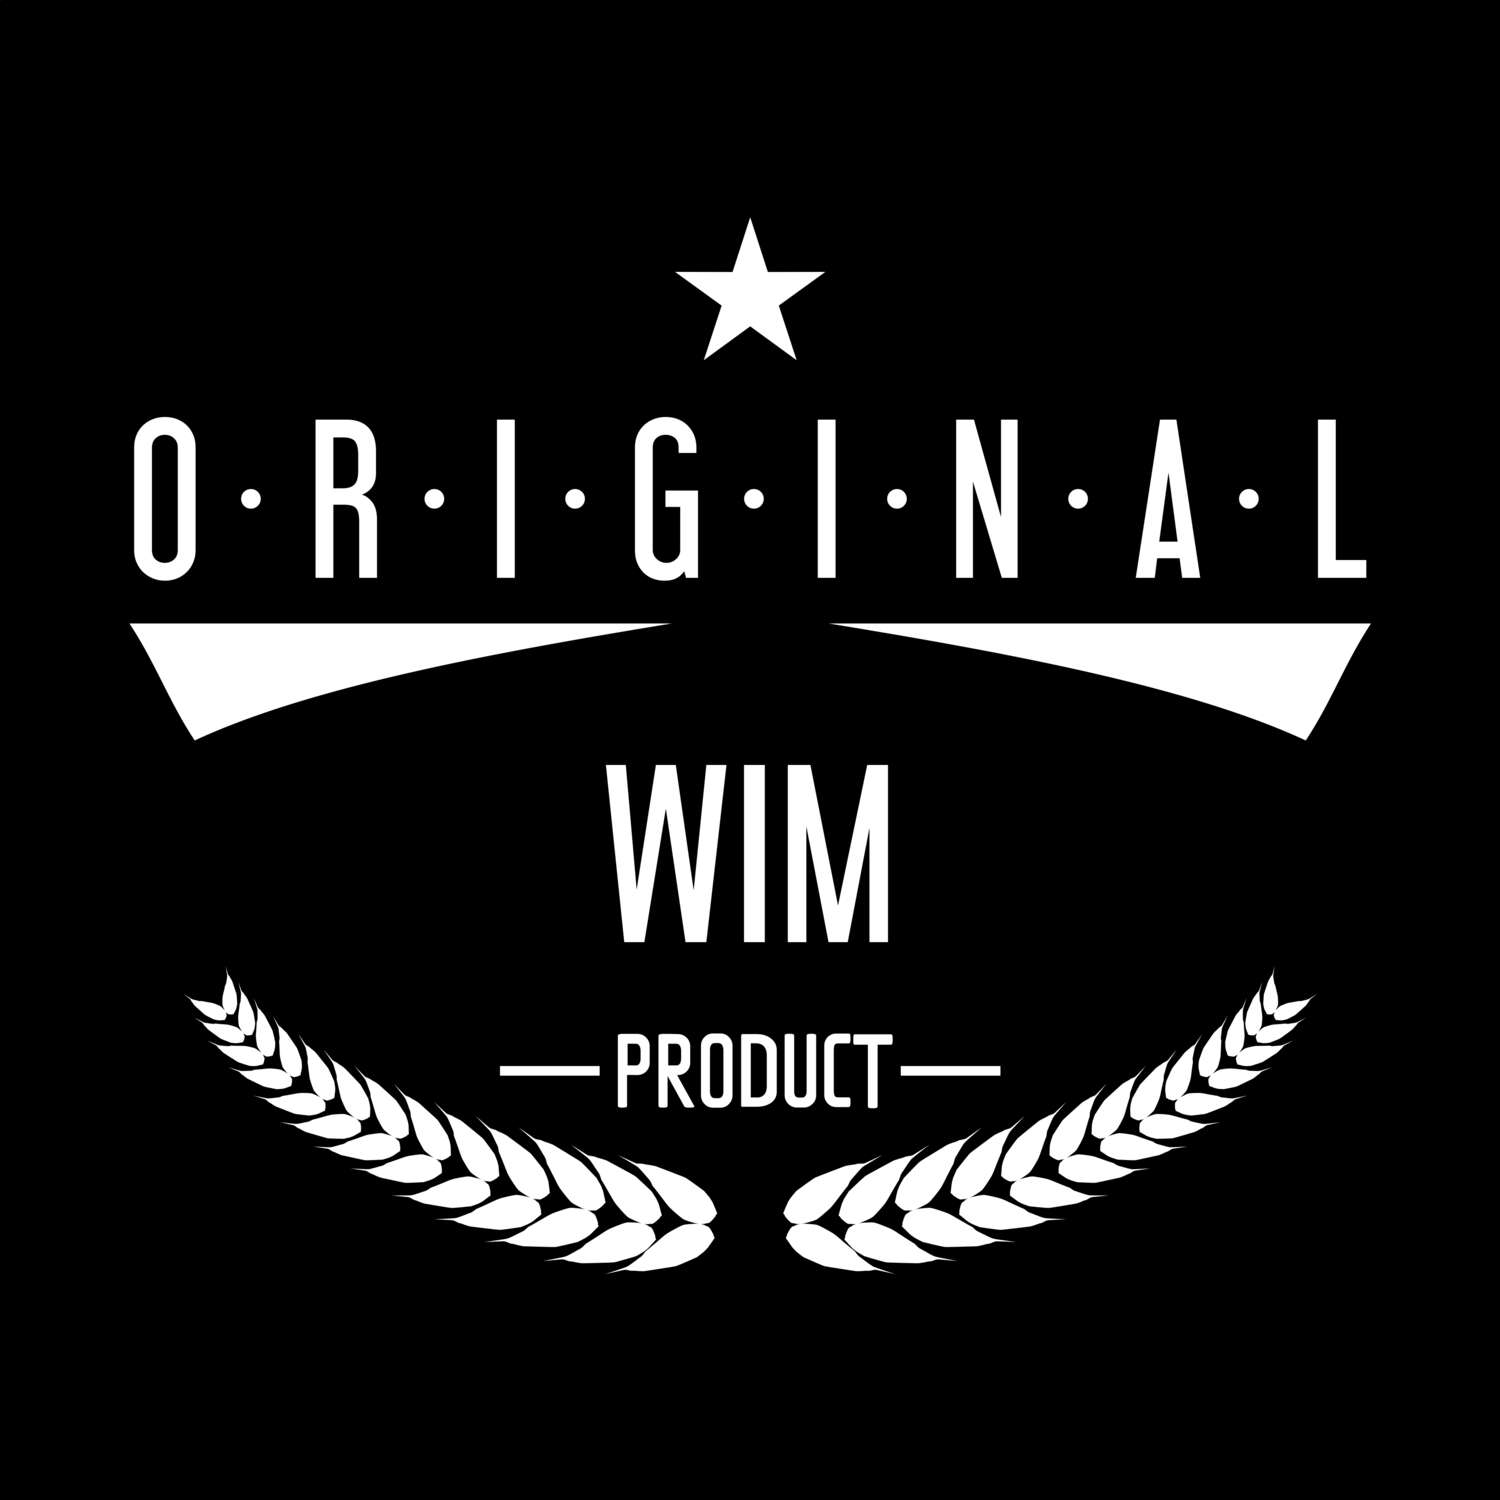 Wim T-Shirt »Original Product«